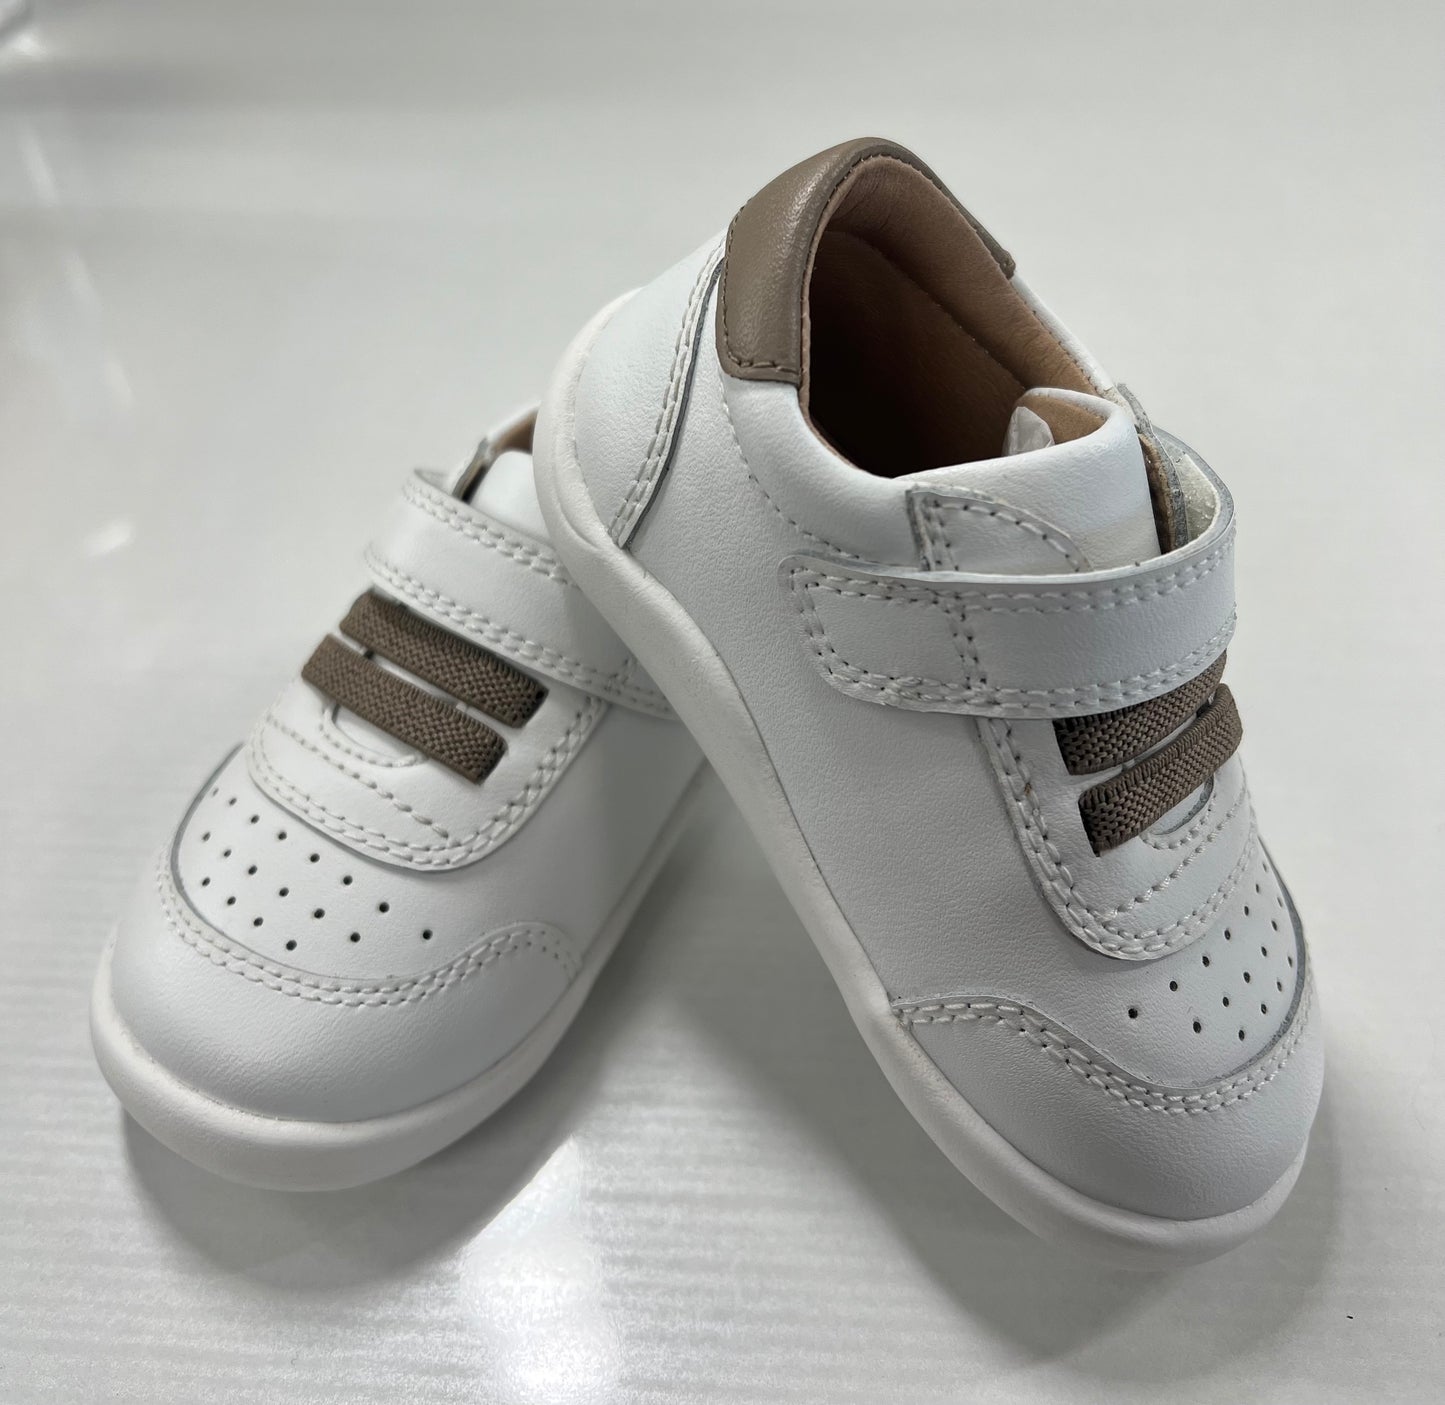 Toddler Tennis Shoes